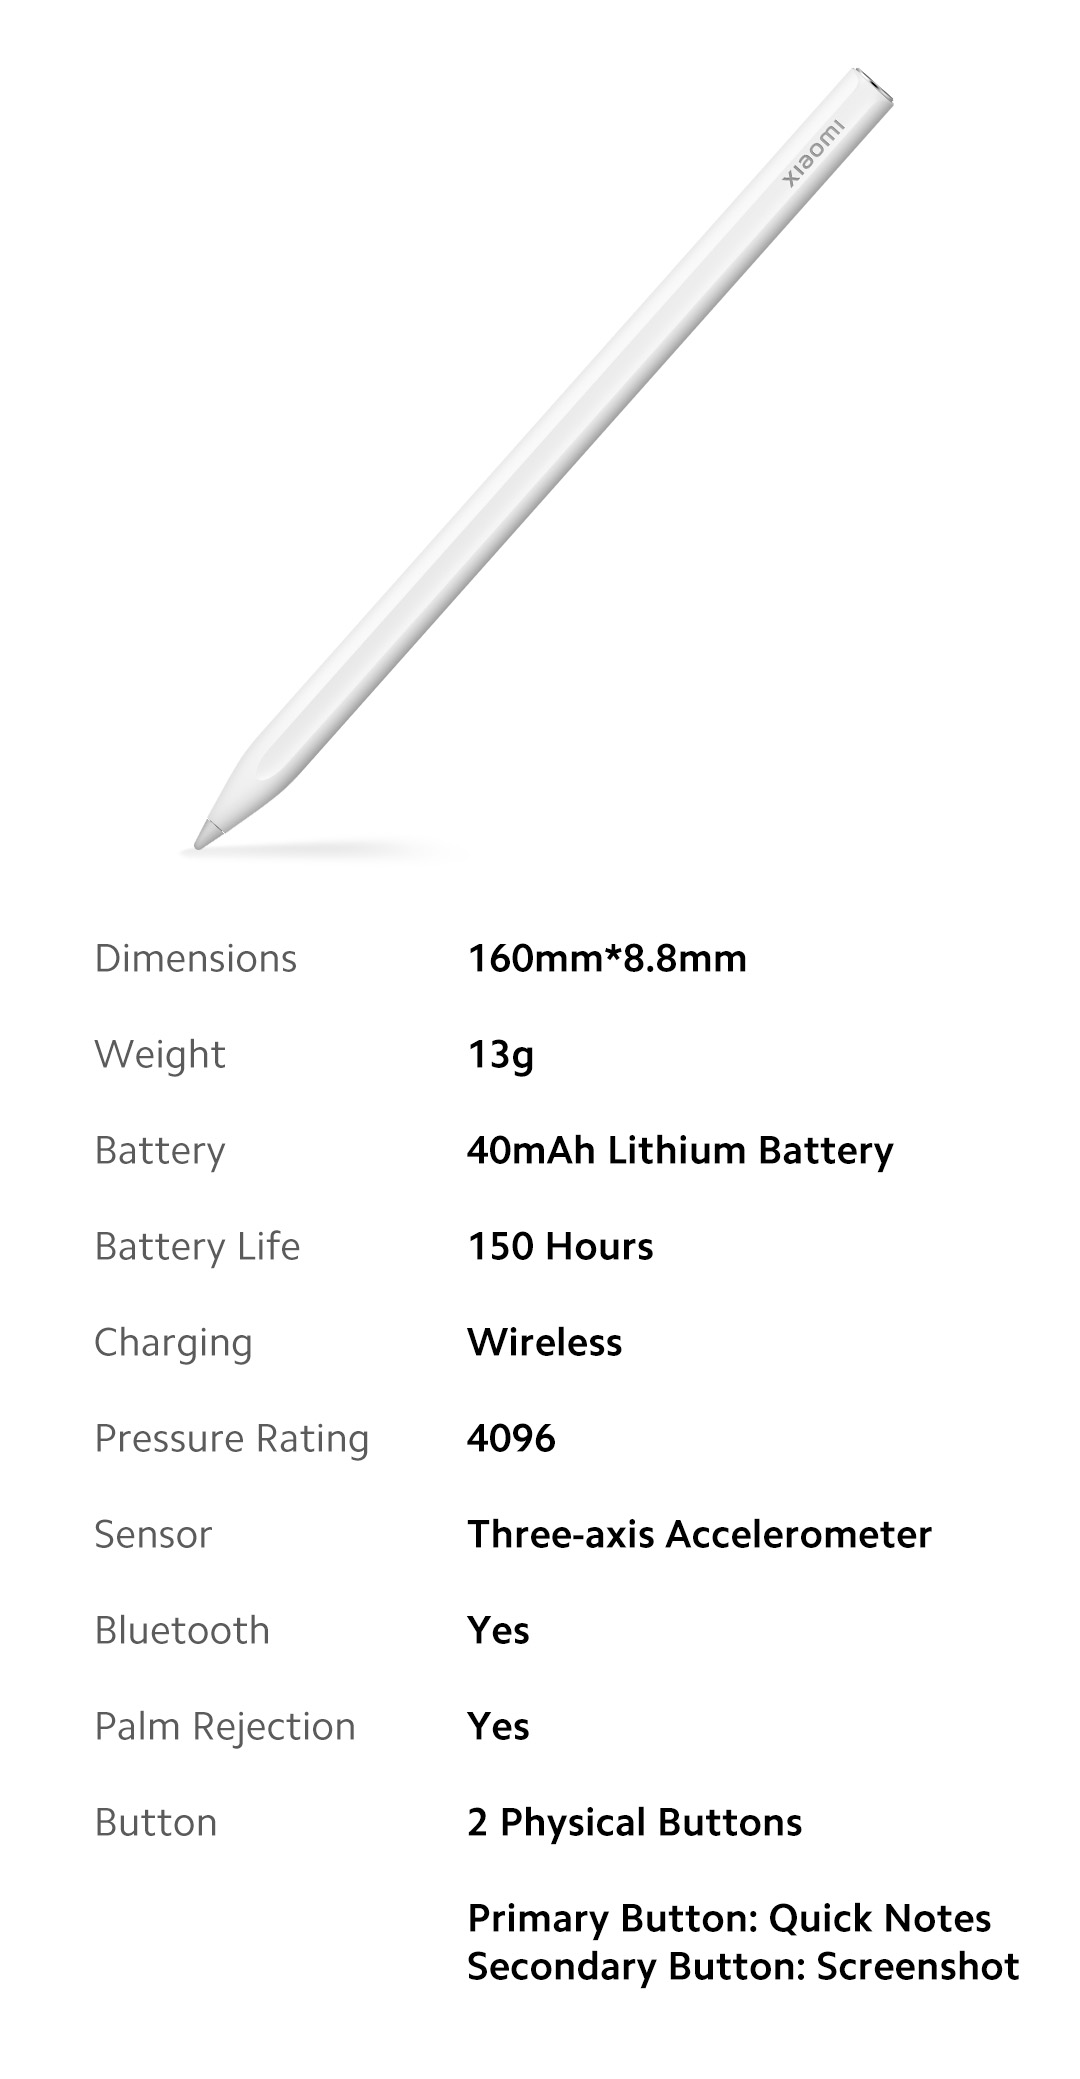 Xiaomi Smart Pen (2nd Generation)]Product Info - Mi India